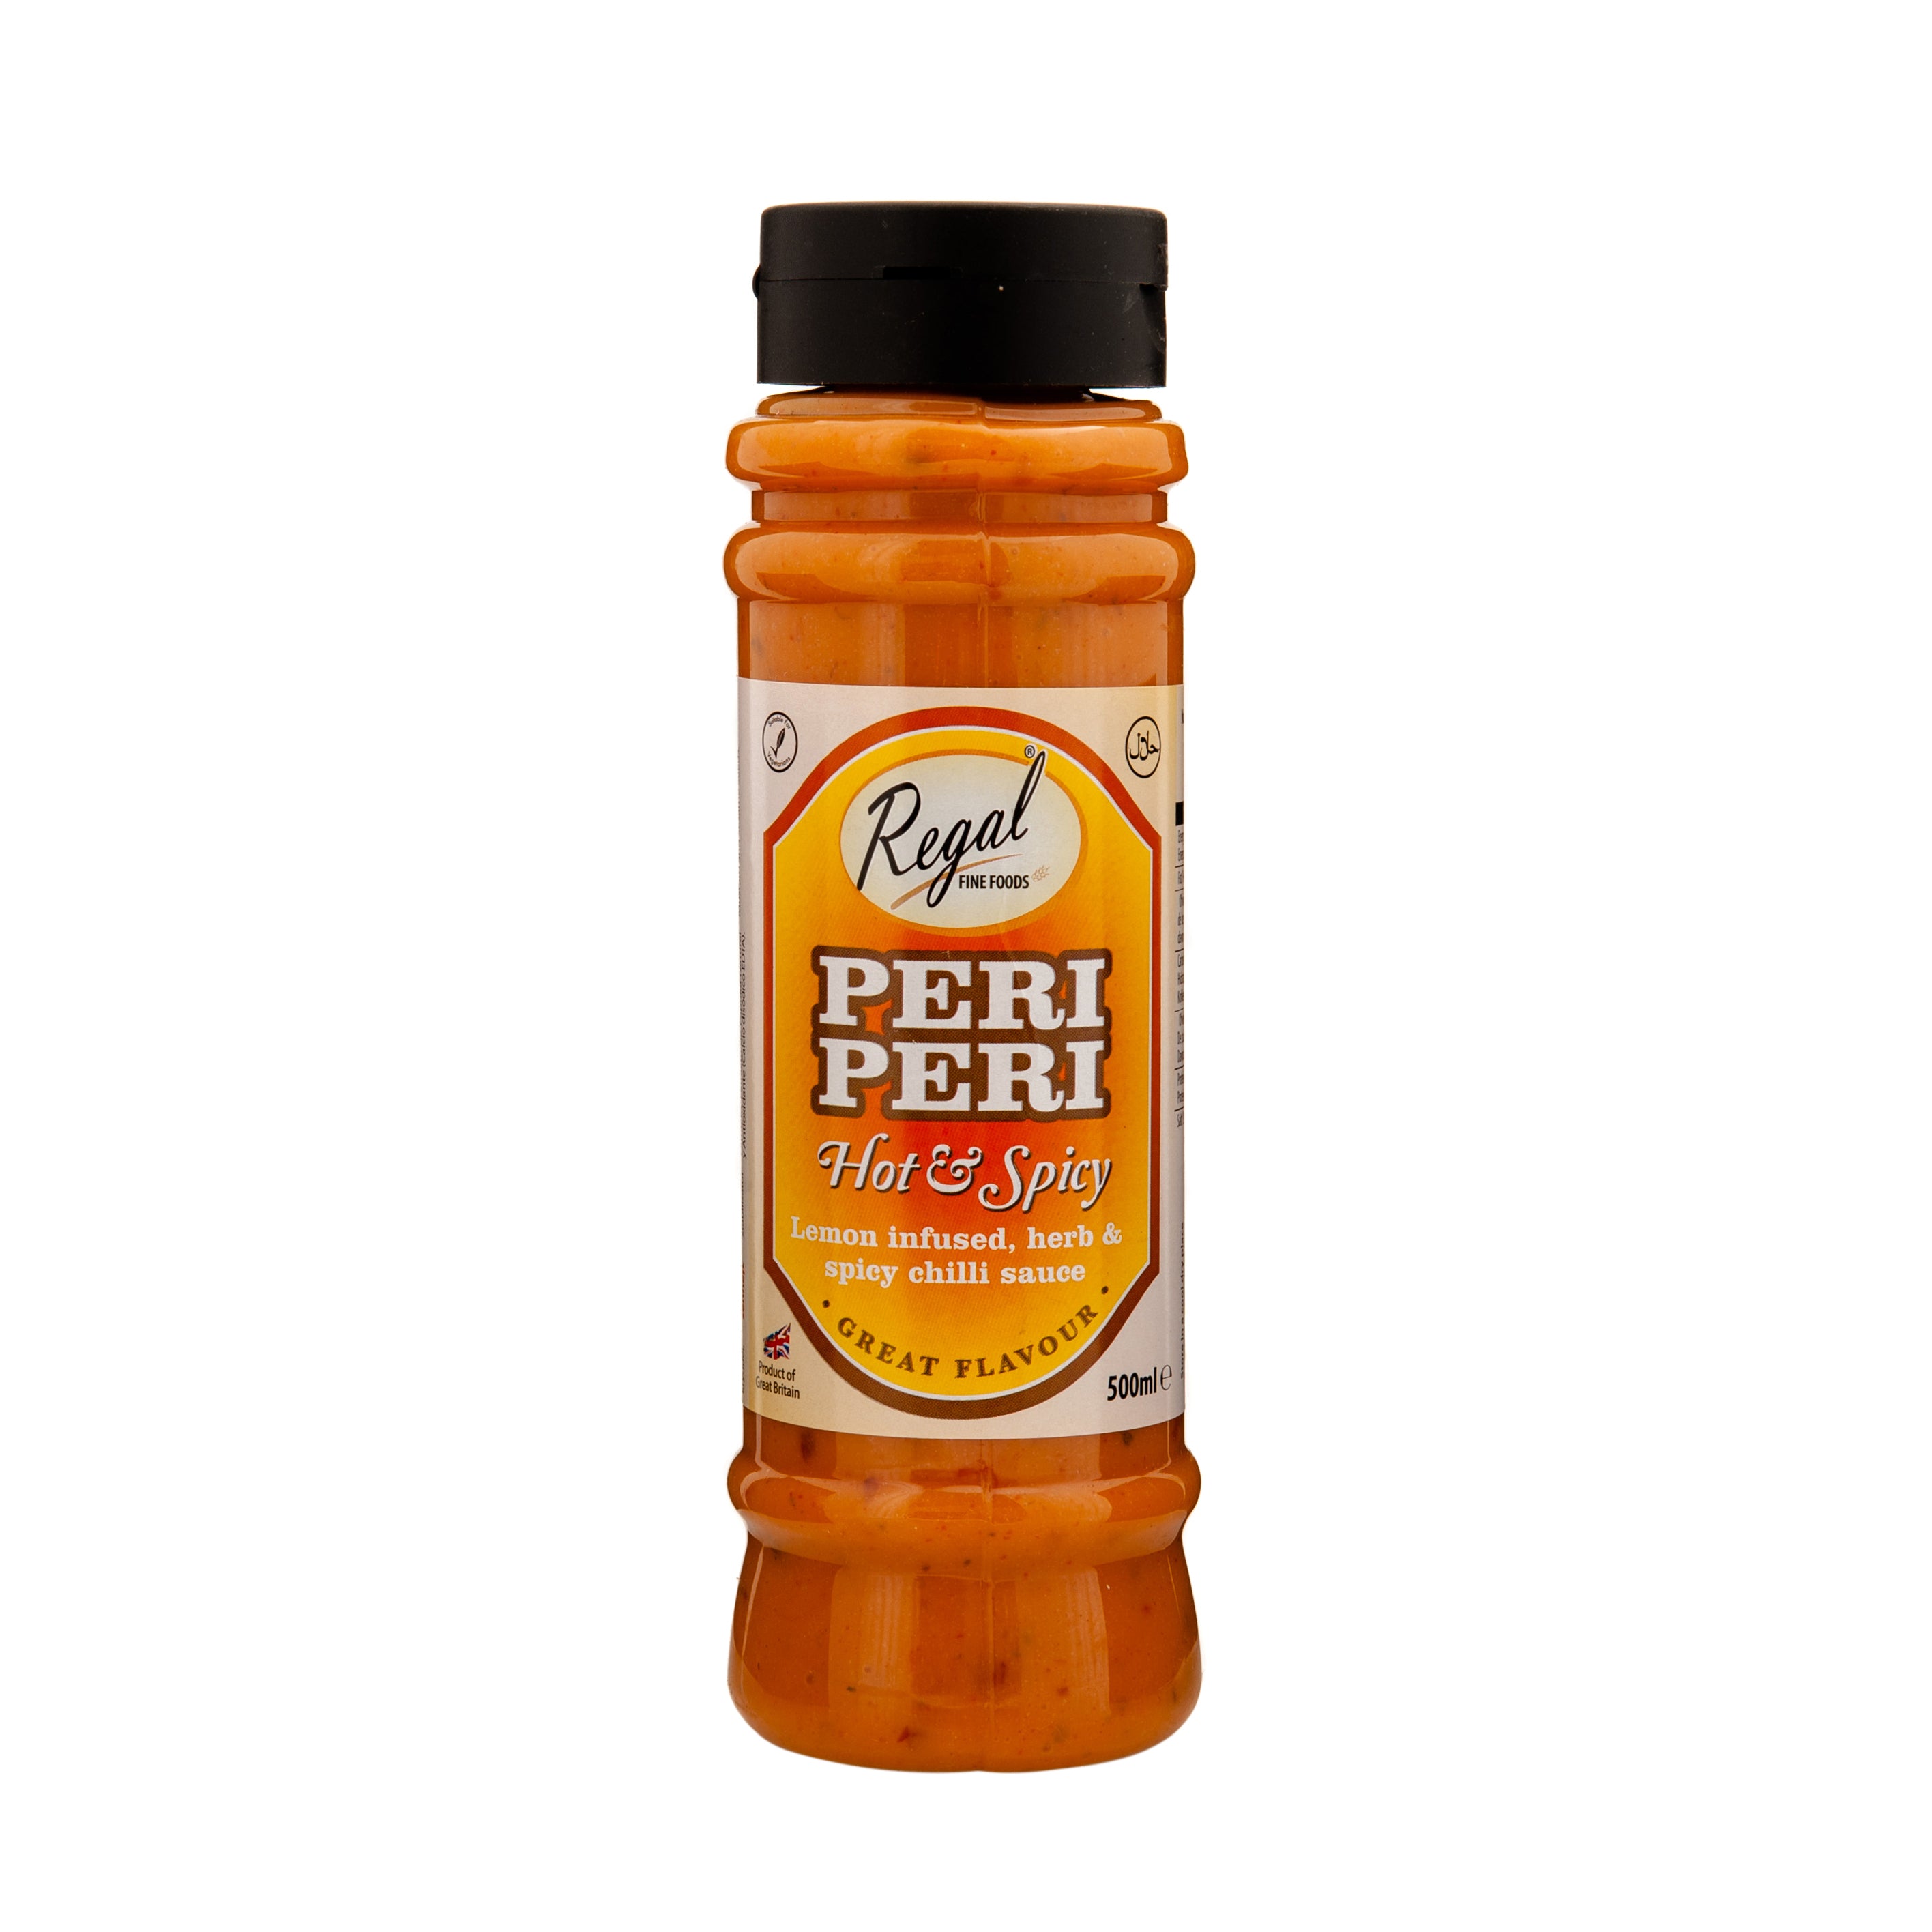 Regal Peri Peri Sauce - SaveCo Cash & Carry